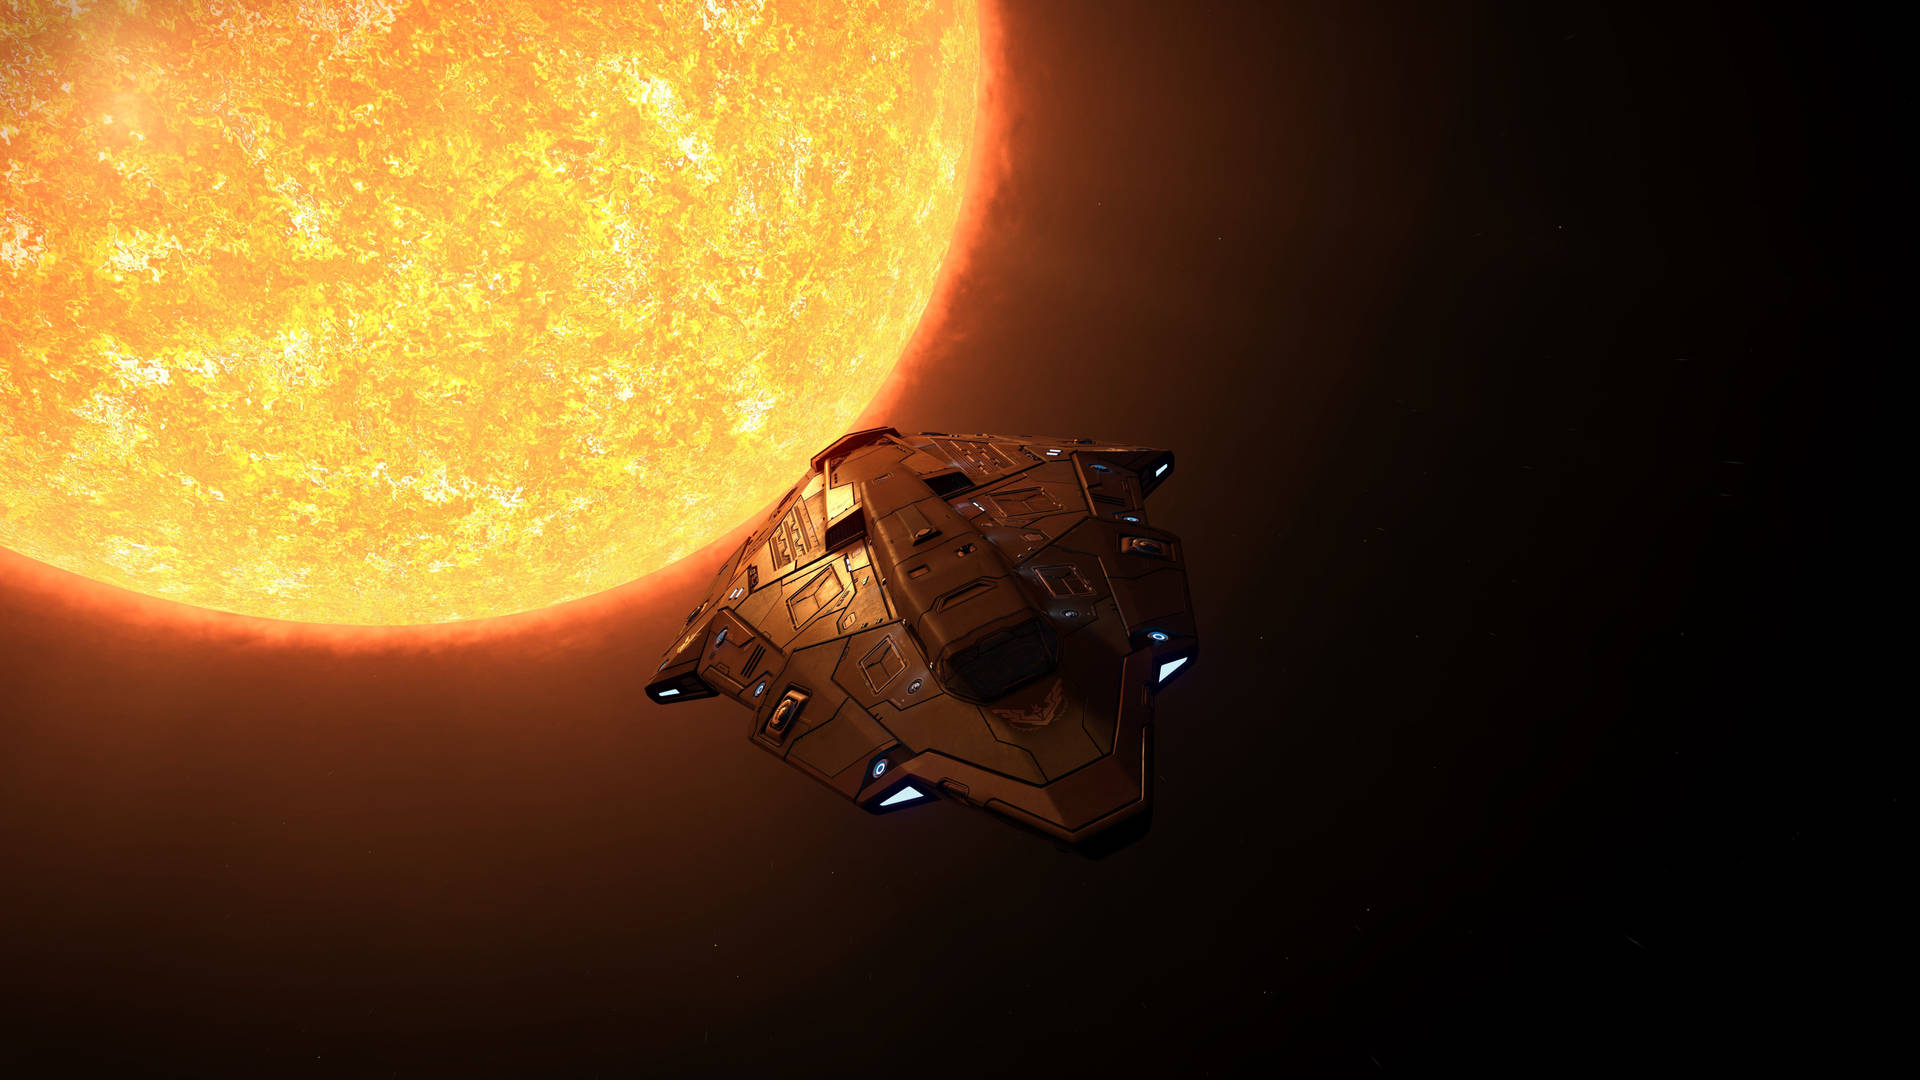 Cool Sci-fi Spaceship Picture